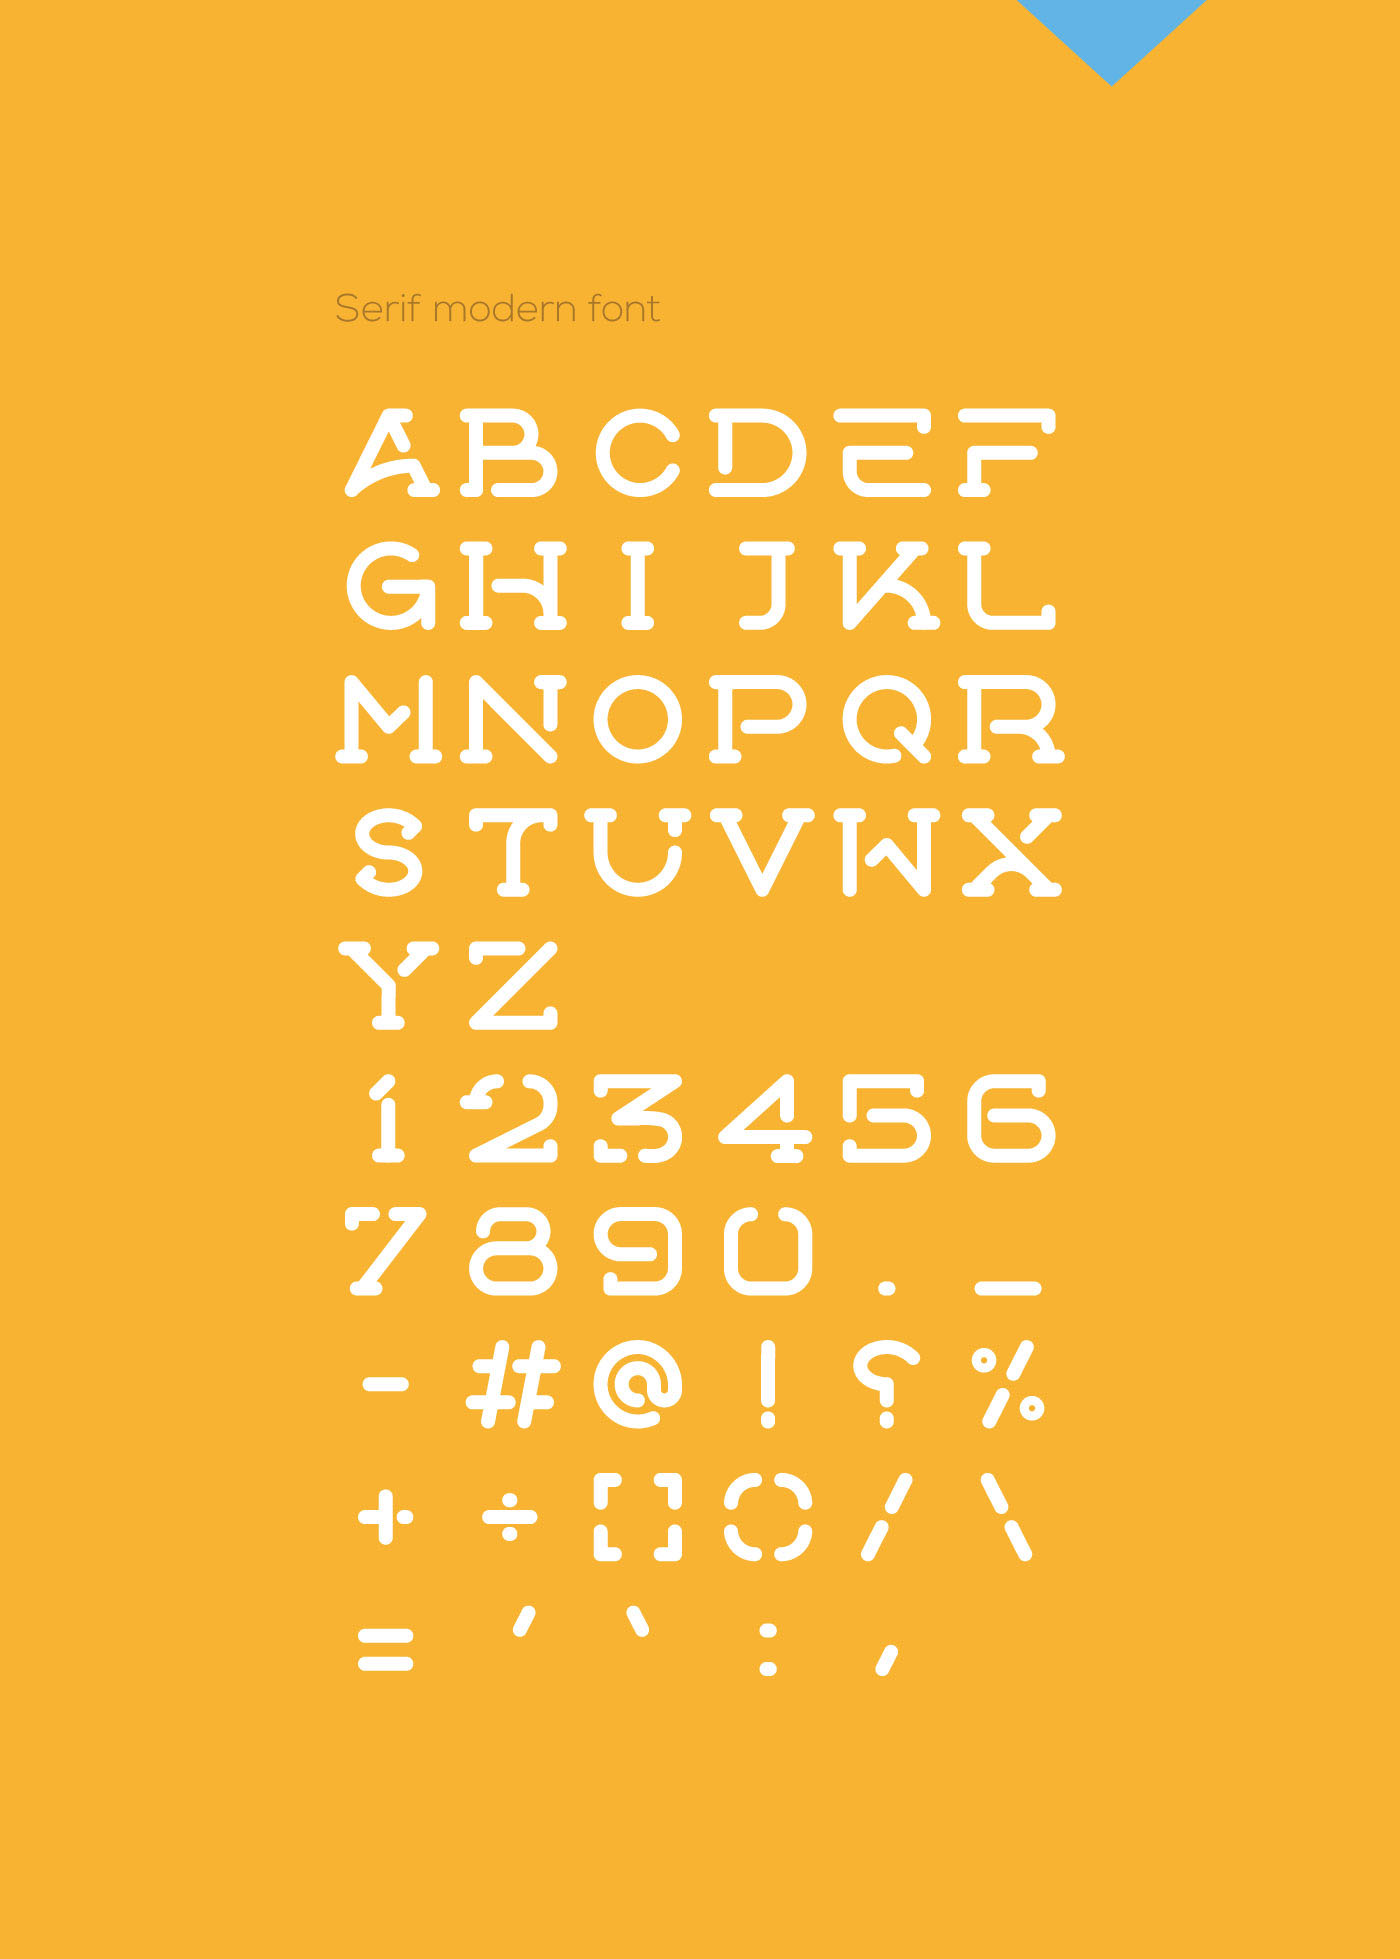 AOOX Free Typeface - serif, sans-serif